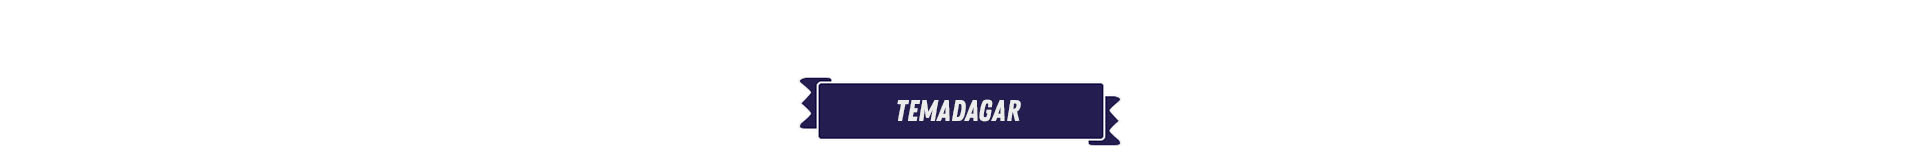 Banner med texten &quot;Temadagar&quot;